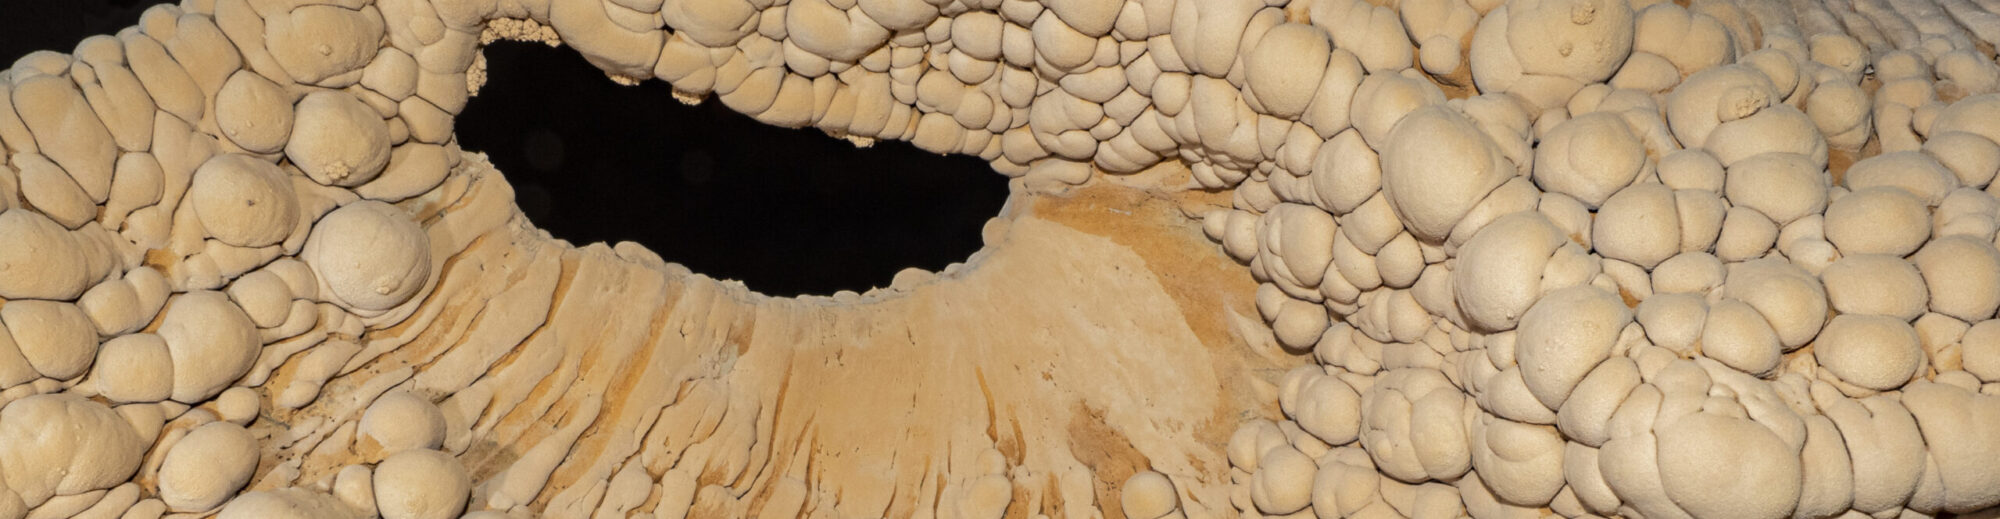 Cuevas hipogénicas – Hypogenic caves